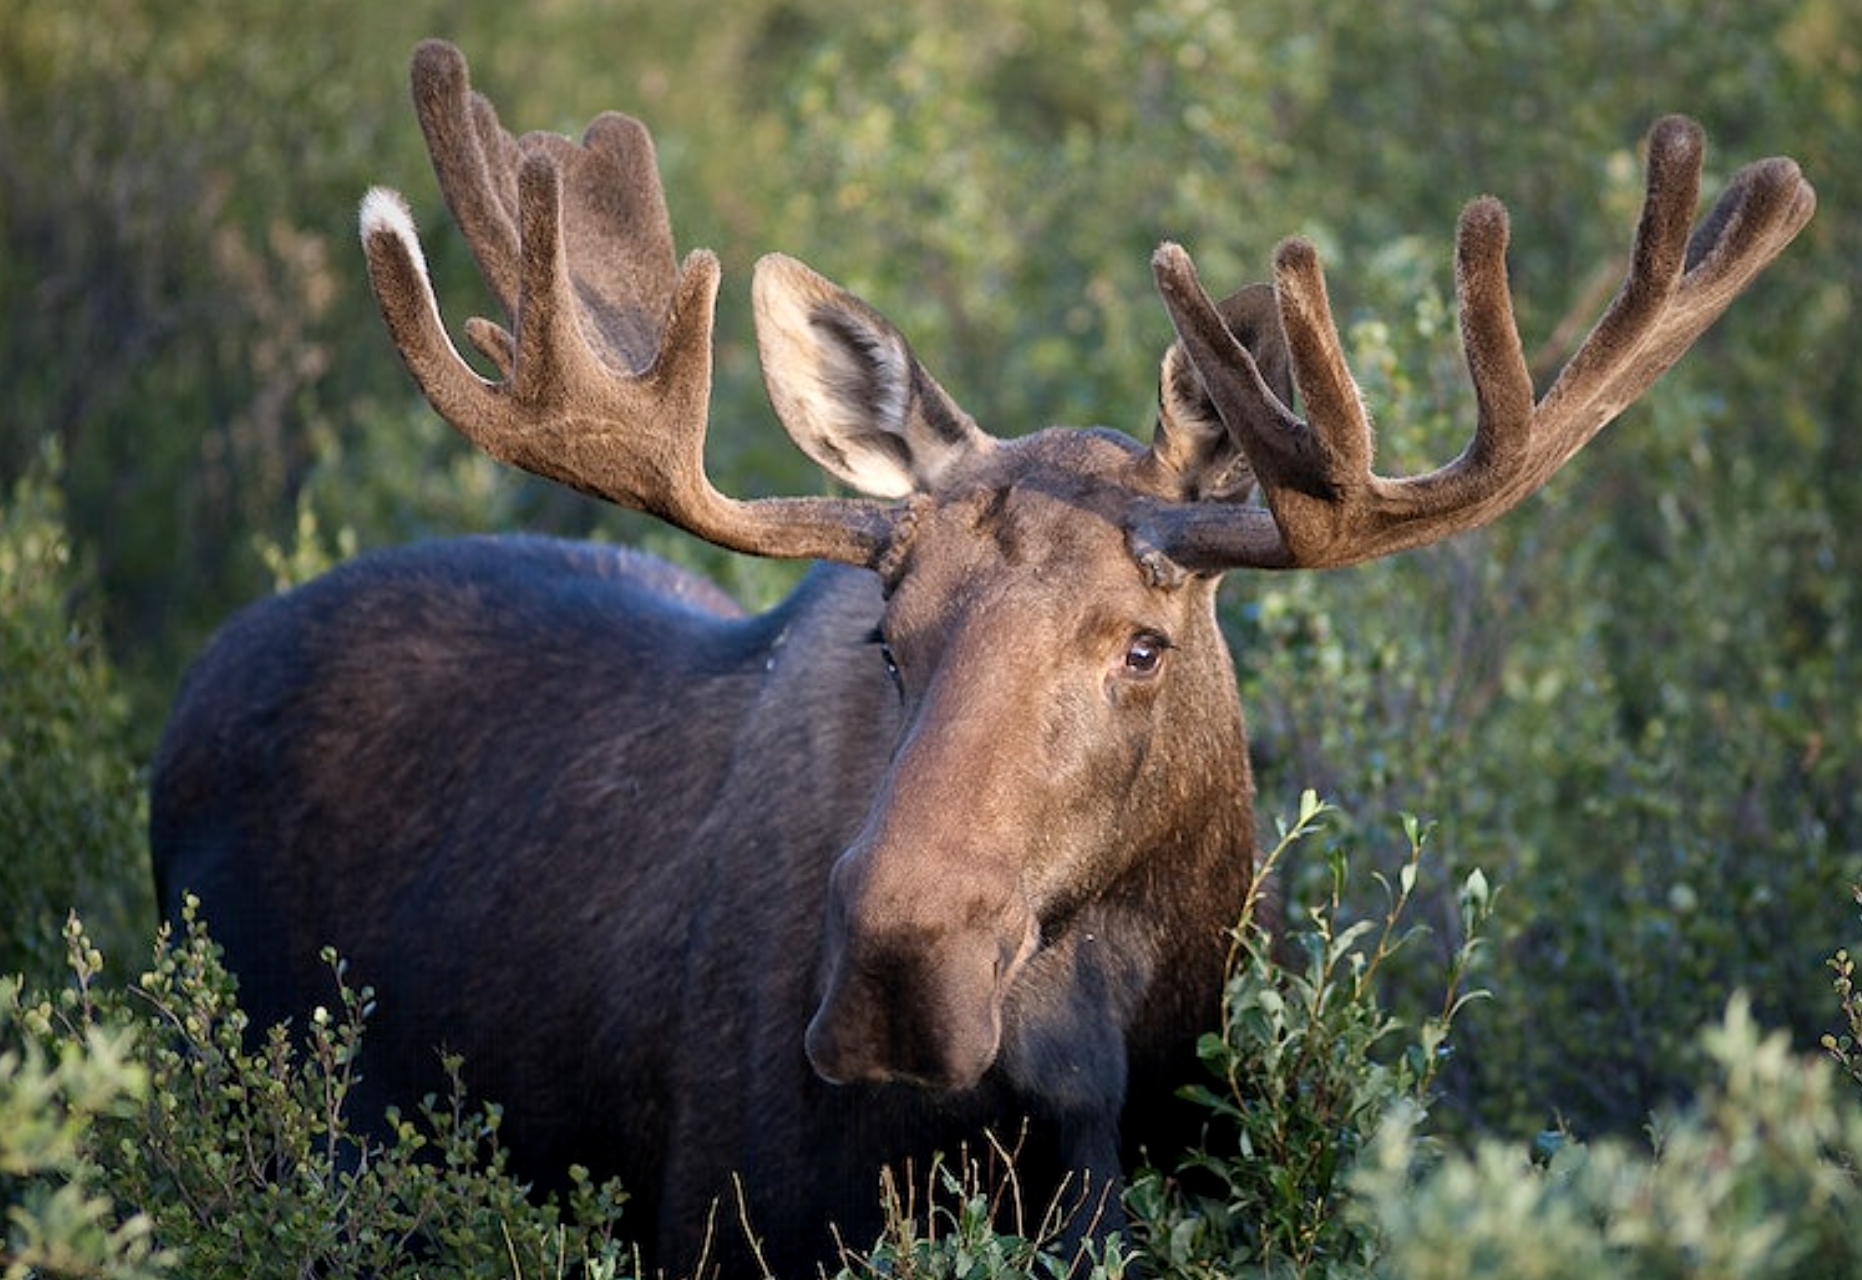 A moose in a meadow